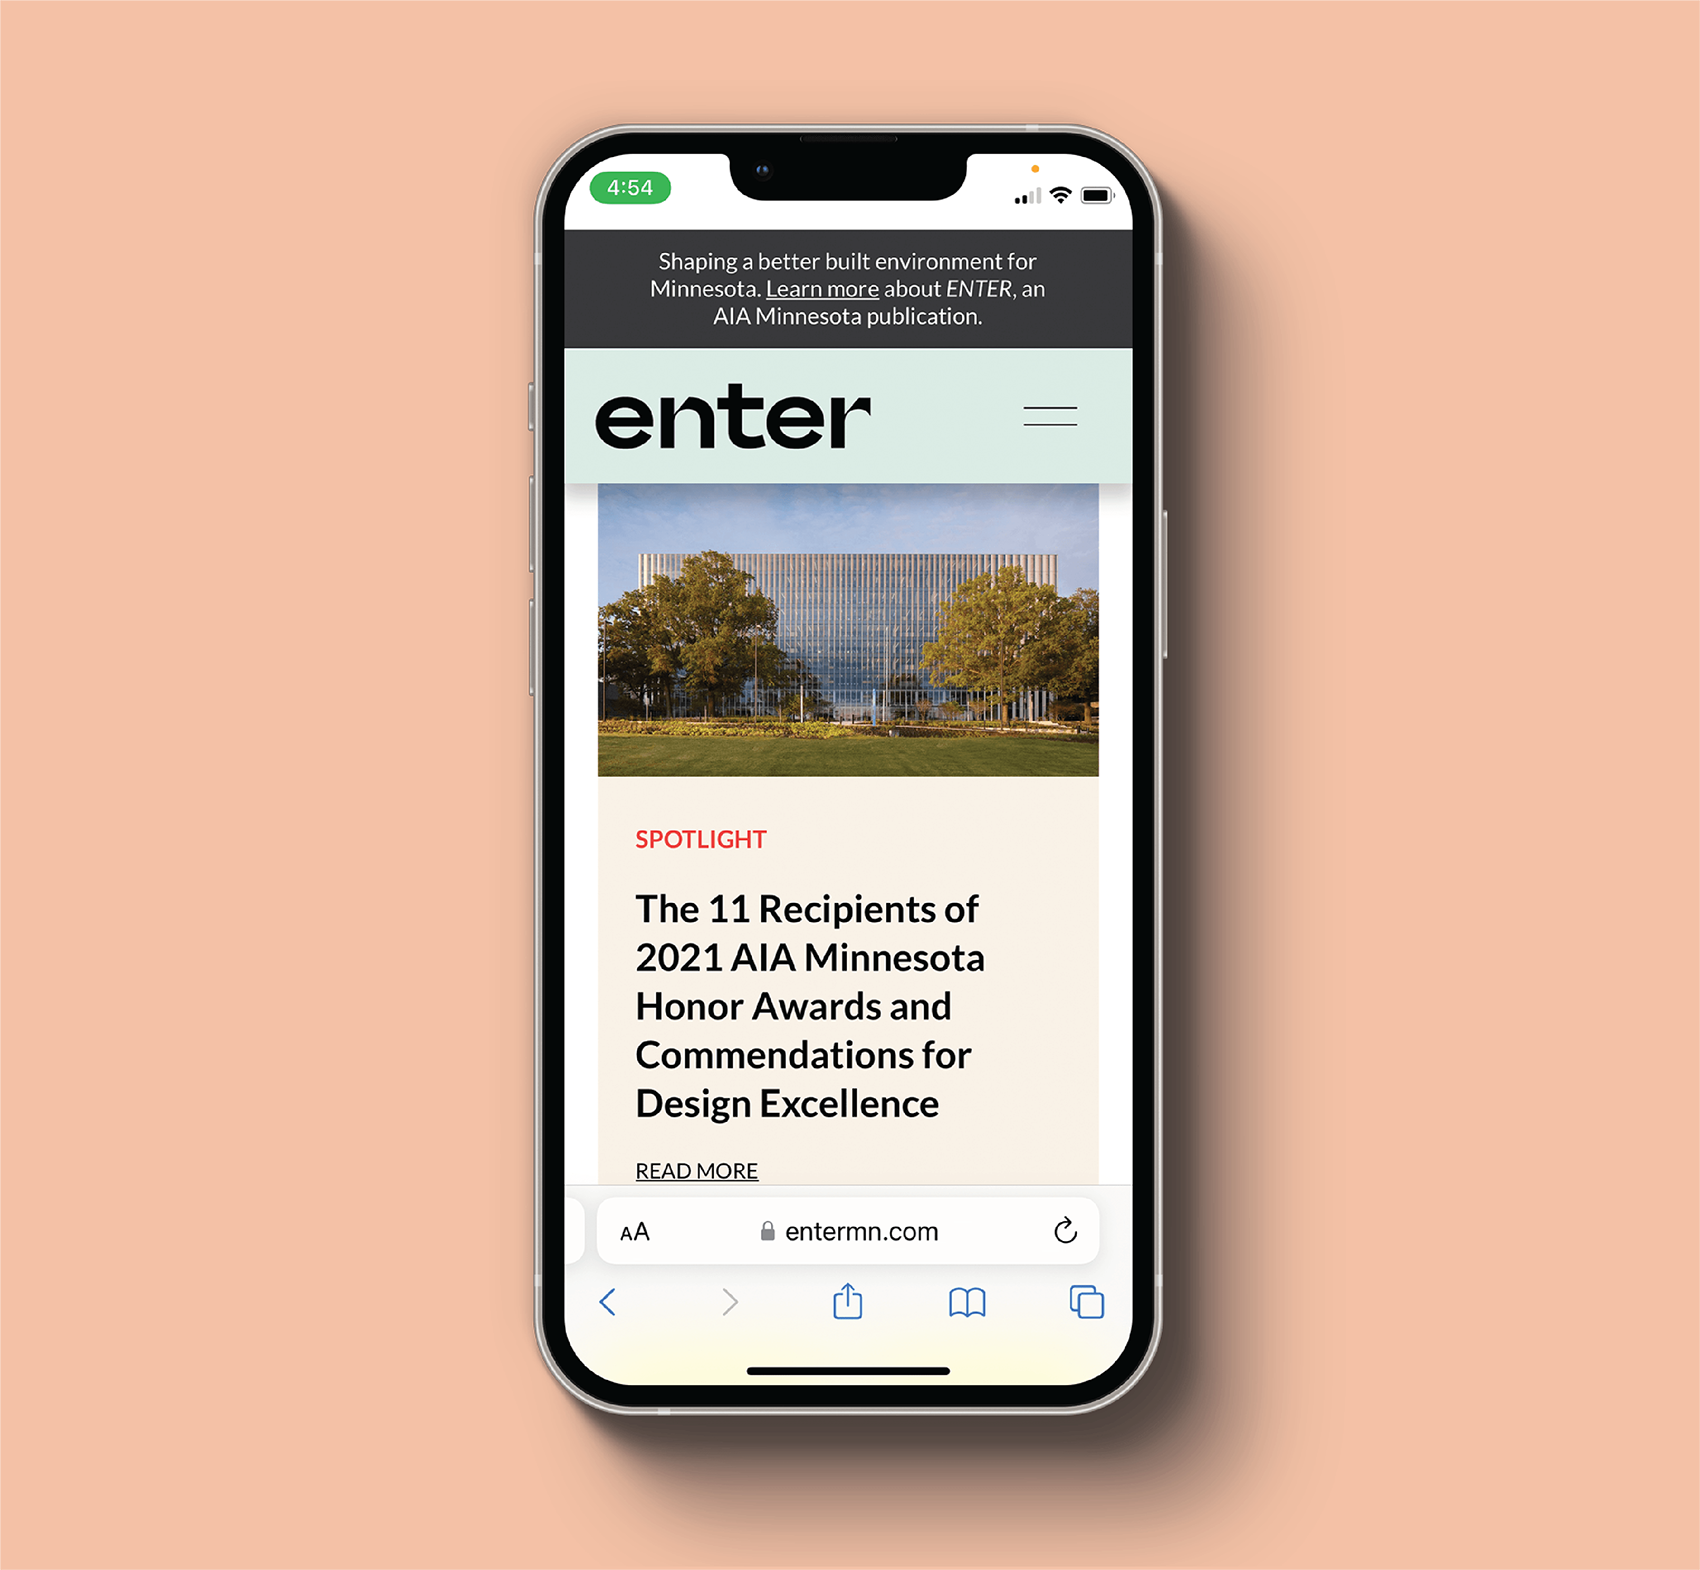 ENTER website shown on an iphone